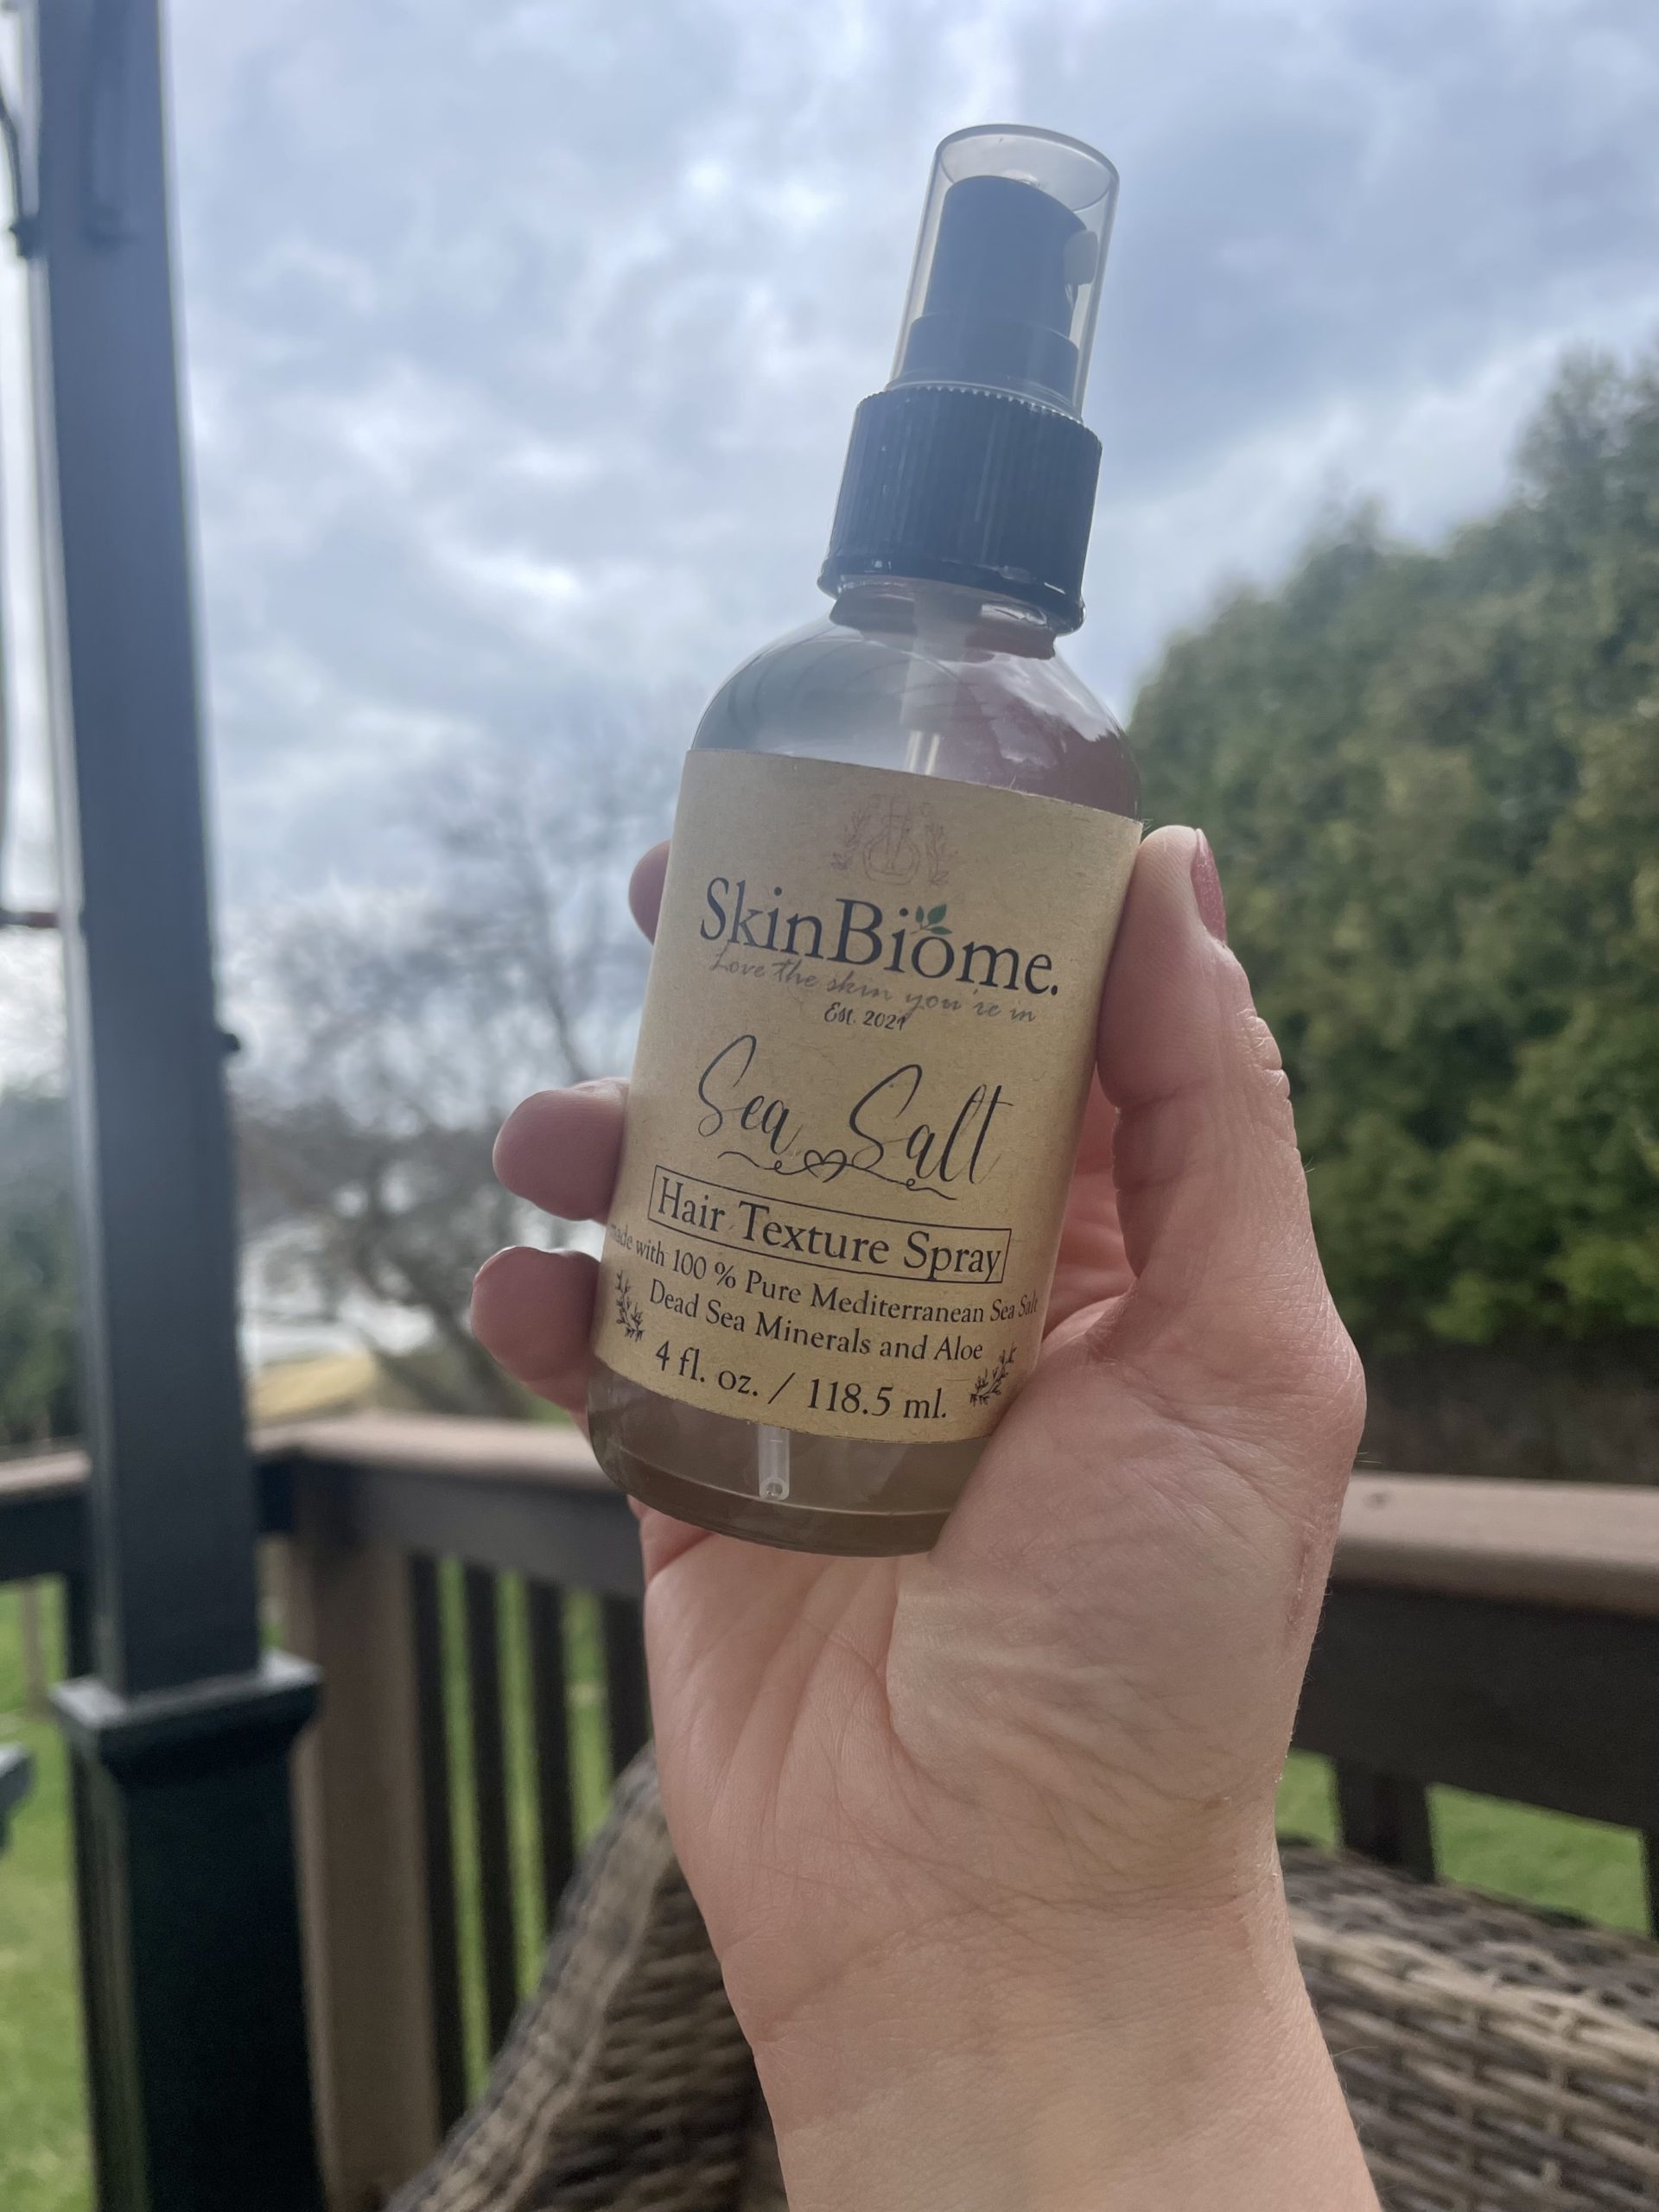 Sea Salt Hair Texture Spray - SkinBiome.